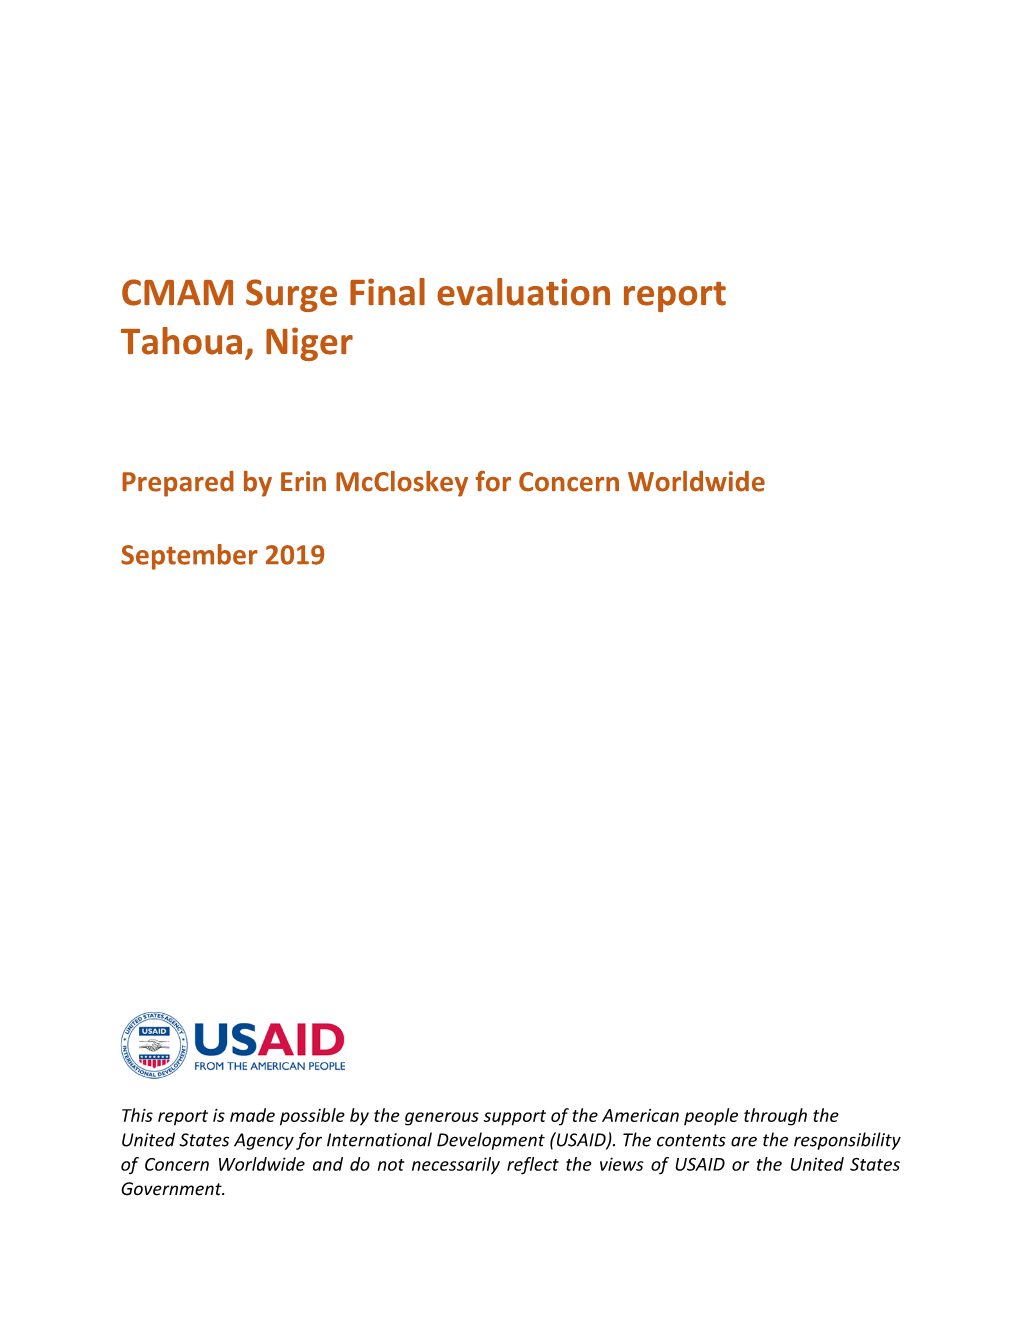 CMAM Surge Final Evaluation Report Tahoua, Niger